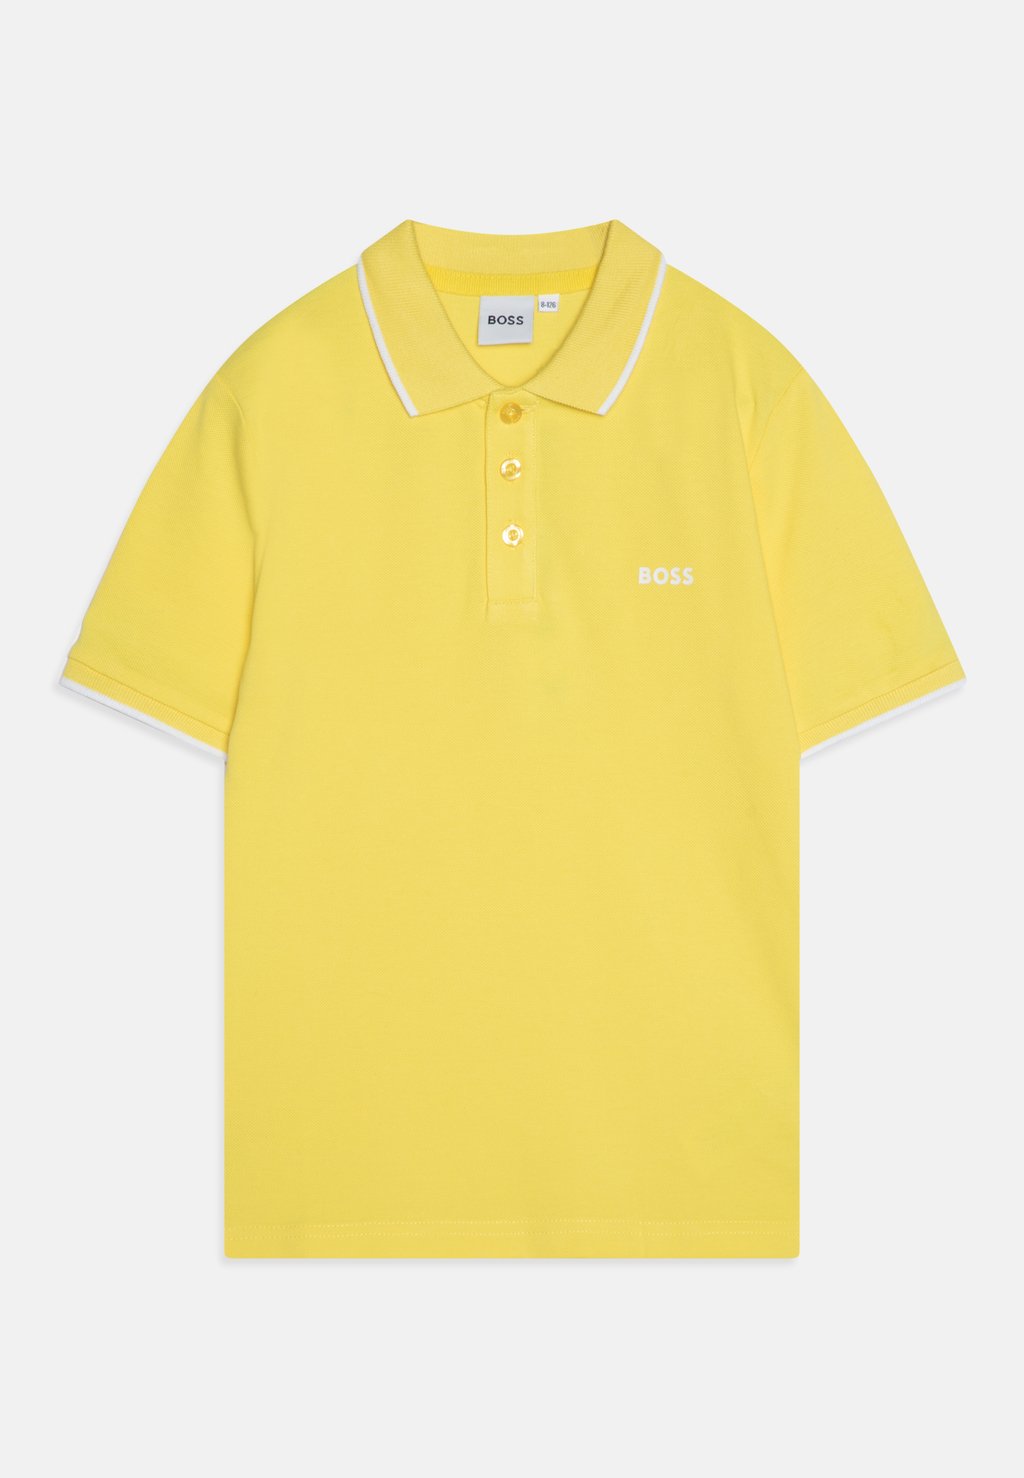 Рубашка-поло SHORT SLEEVE BOSS Kidswear, цвет straw yellow рубашка поло short sleeve boss kidswear цвет white